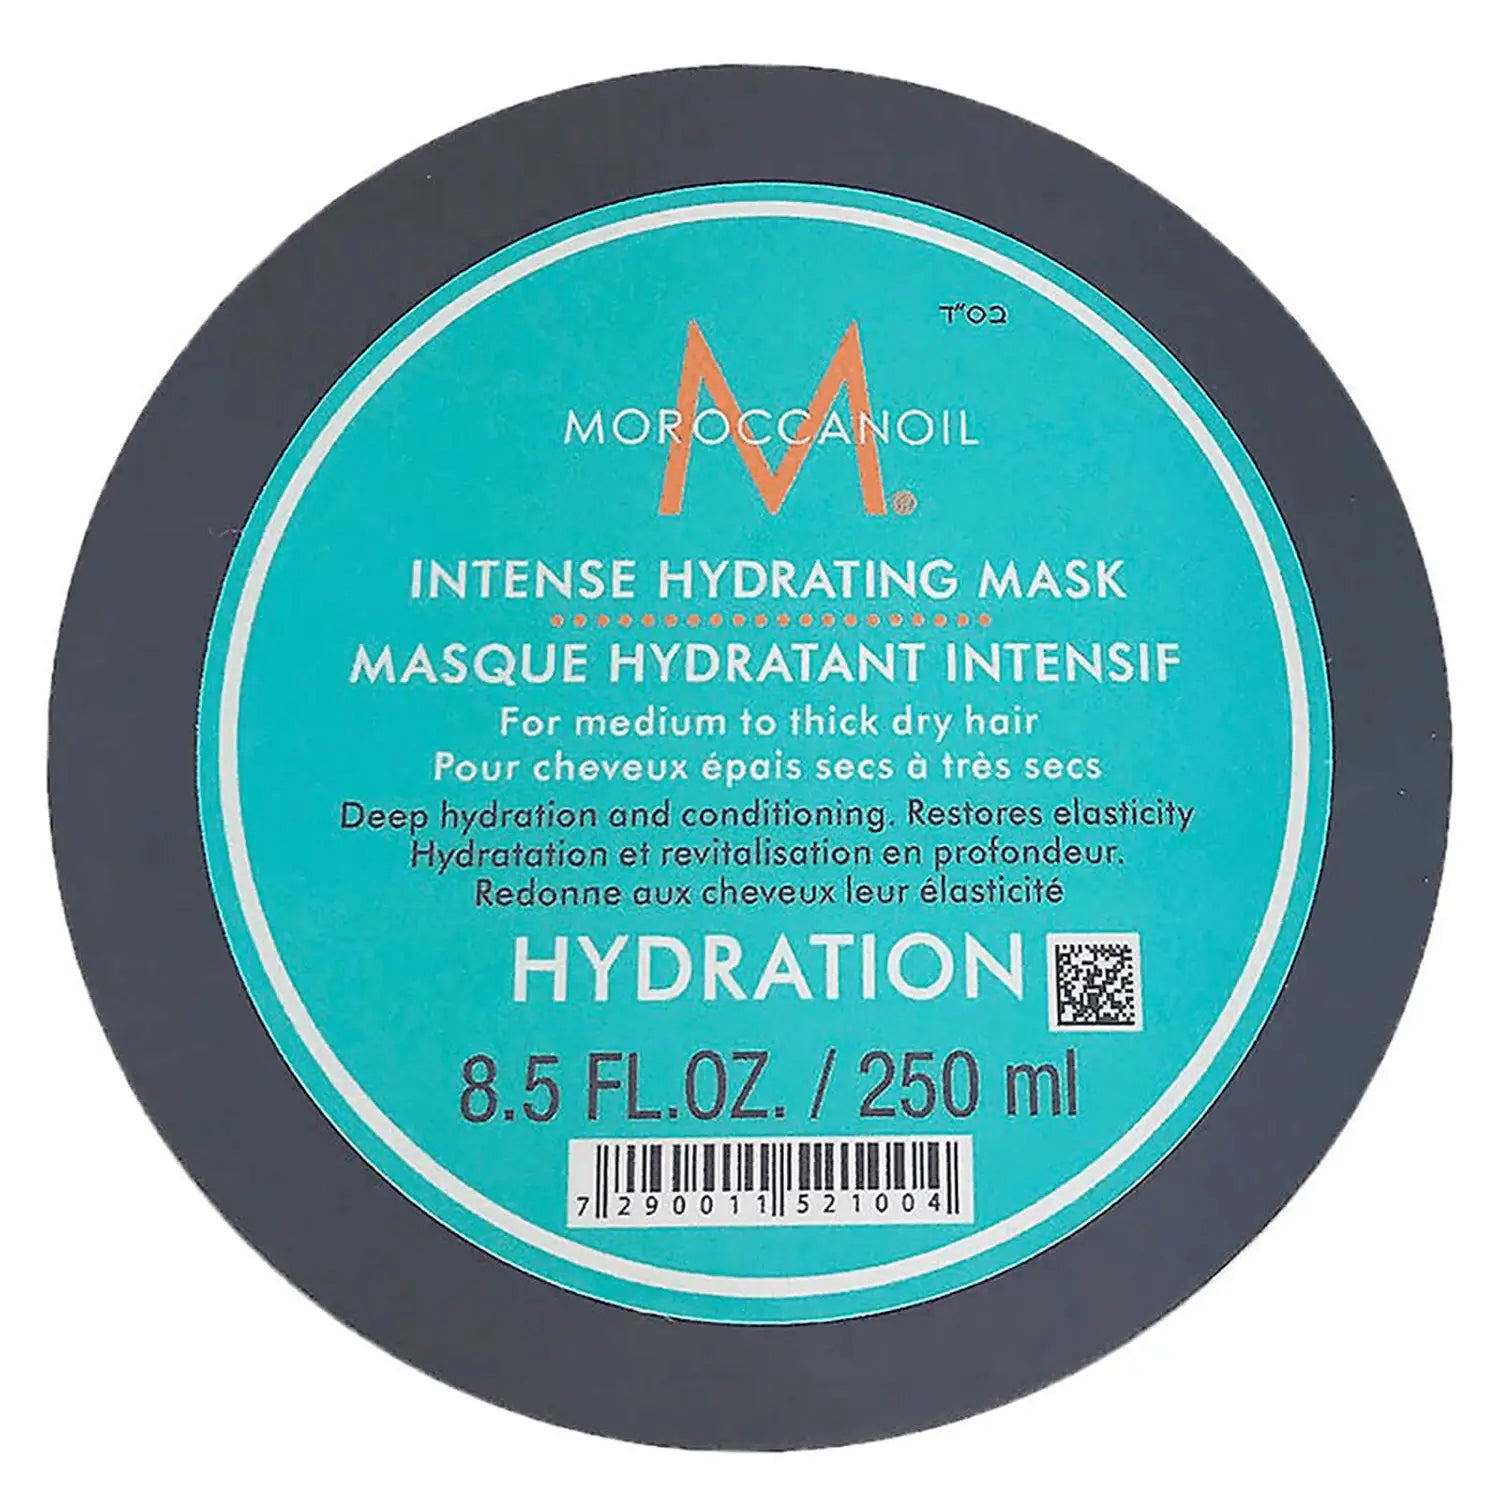 Moroccanoil Intense Hydrating Mask 250ml - Moroccanoil